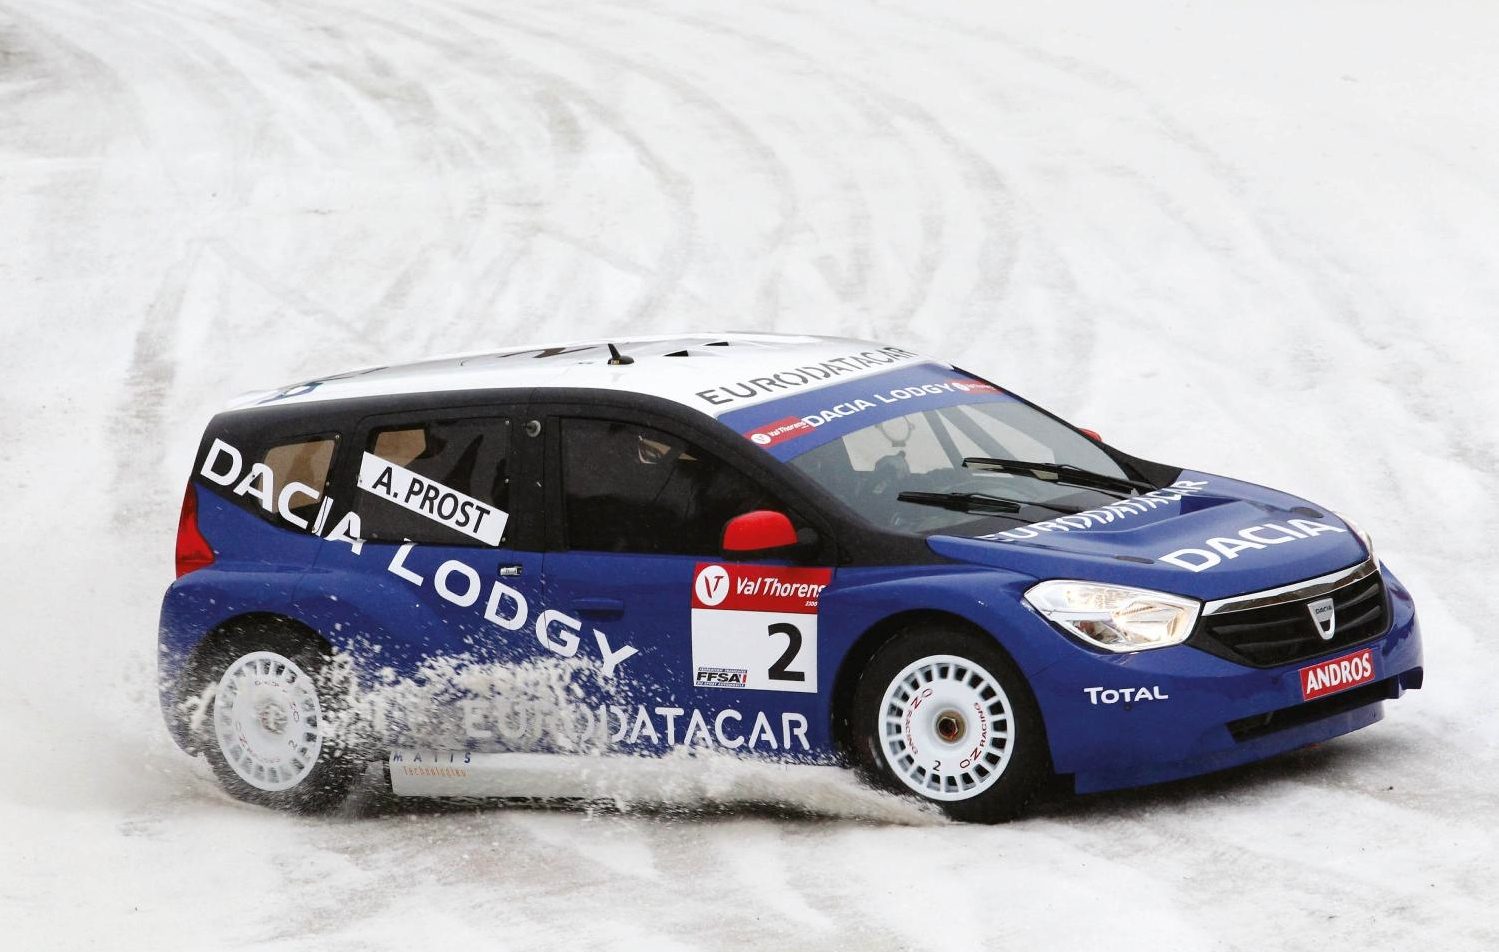 dacia-lodgy-glace-makes-podium-racing-debut-41004_1.jpg